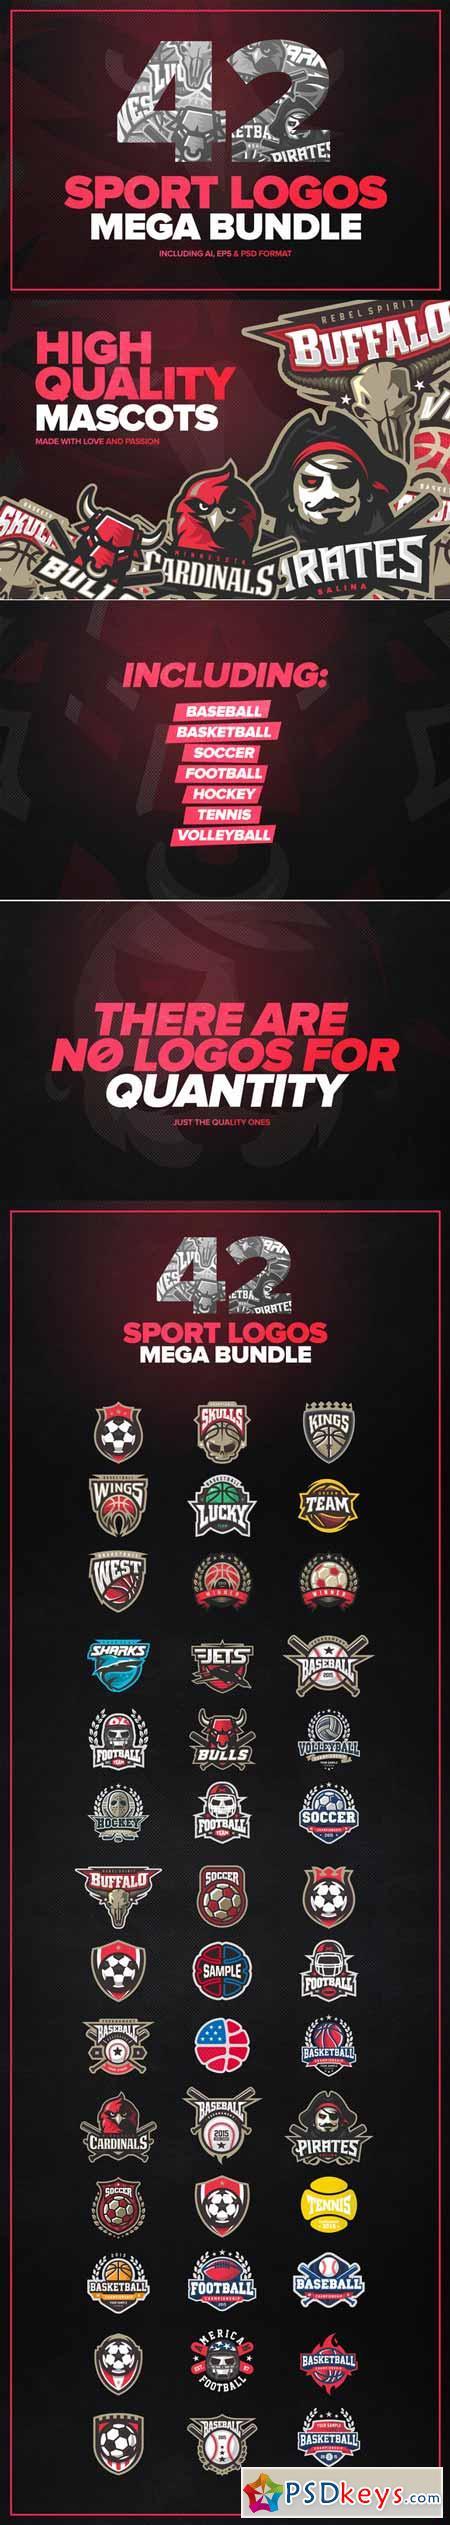 42 Sport logos MEGA BUNDLE 290082